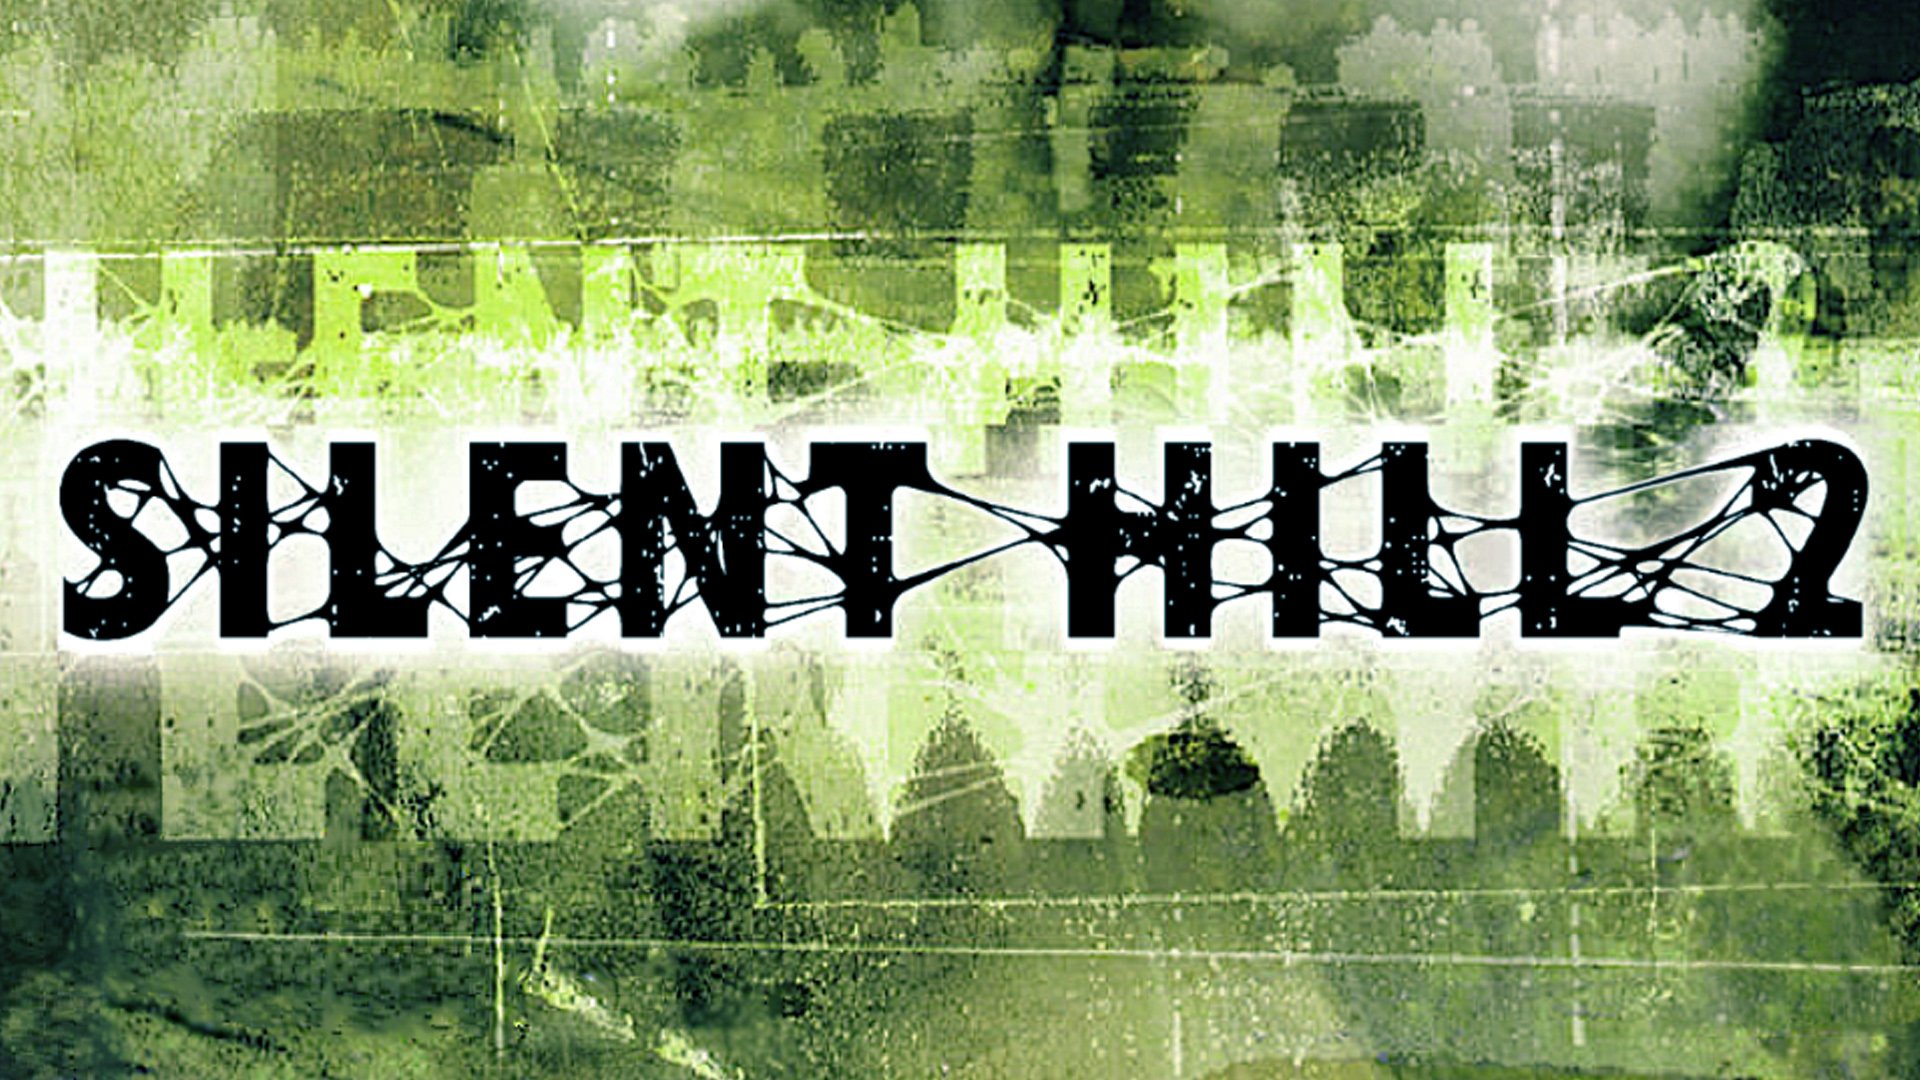 Silent Hill 2 Remake Official Trailer 